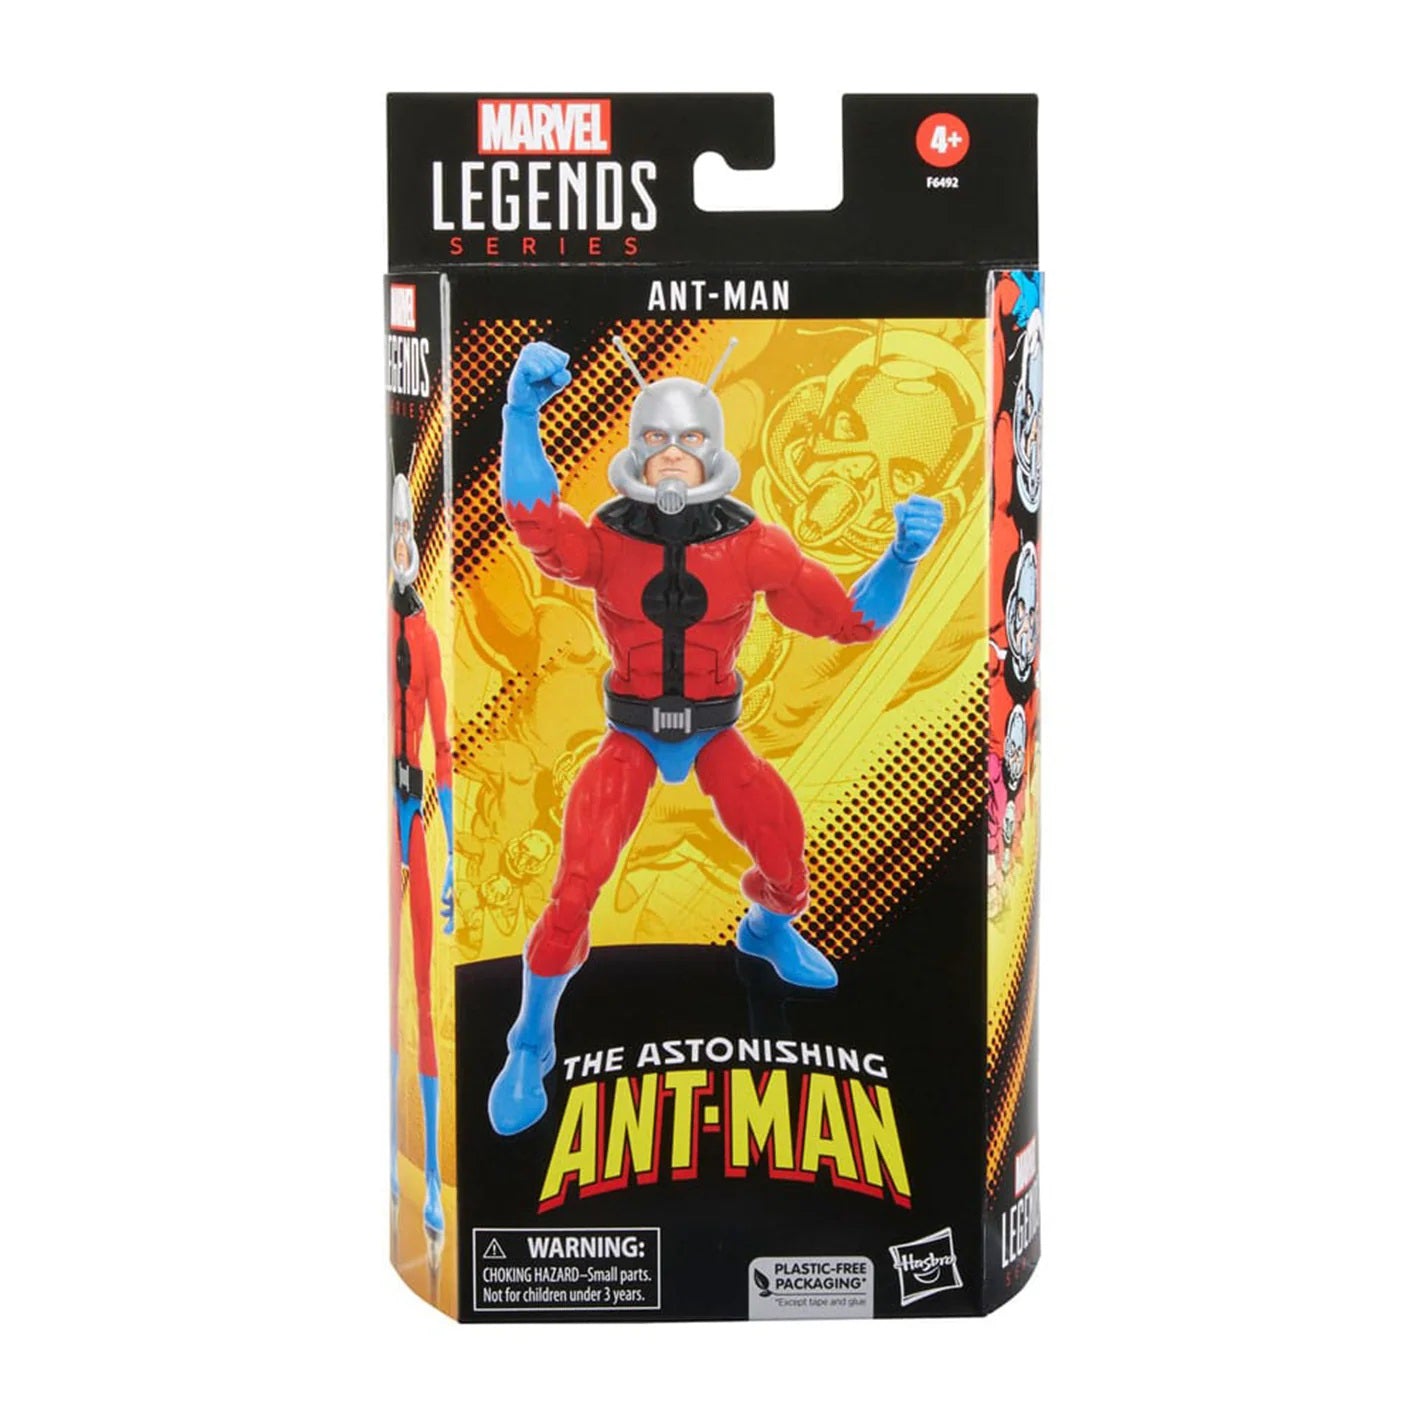 The Astonishing Ant-Man, Marvel Legends